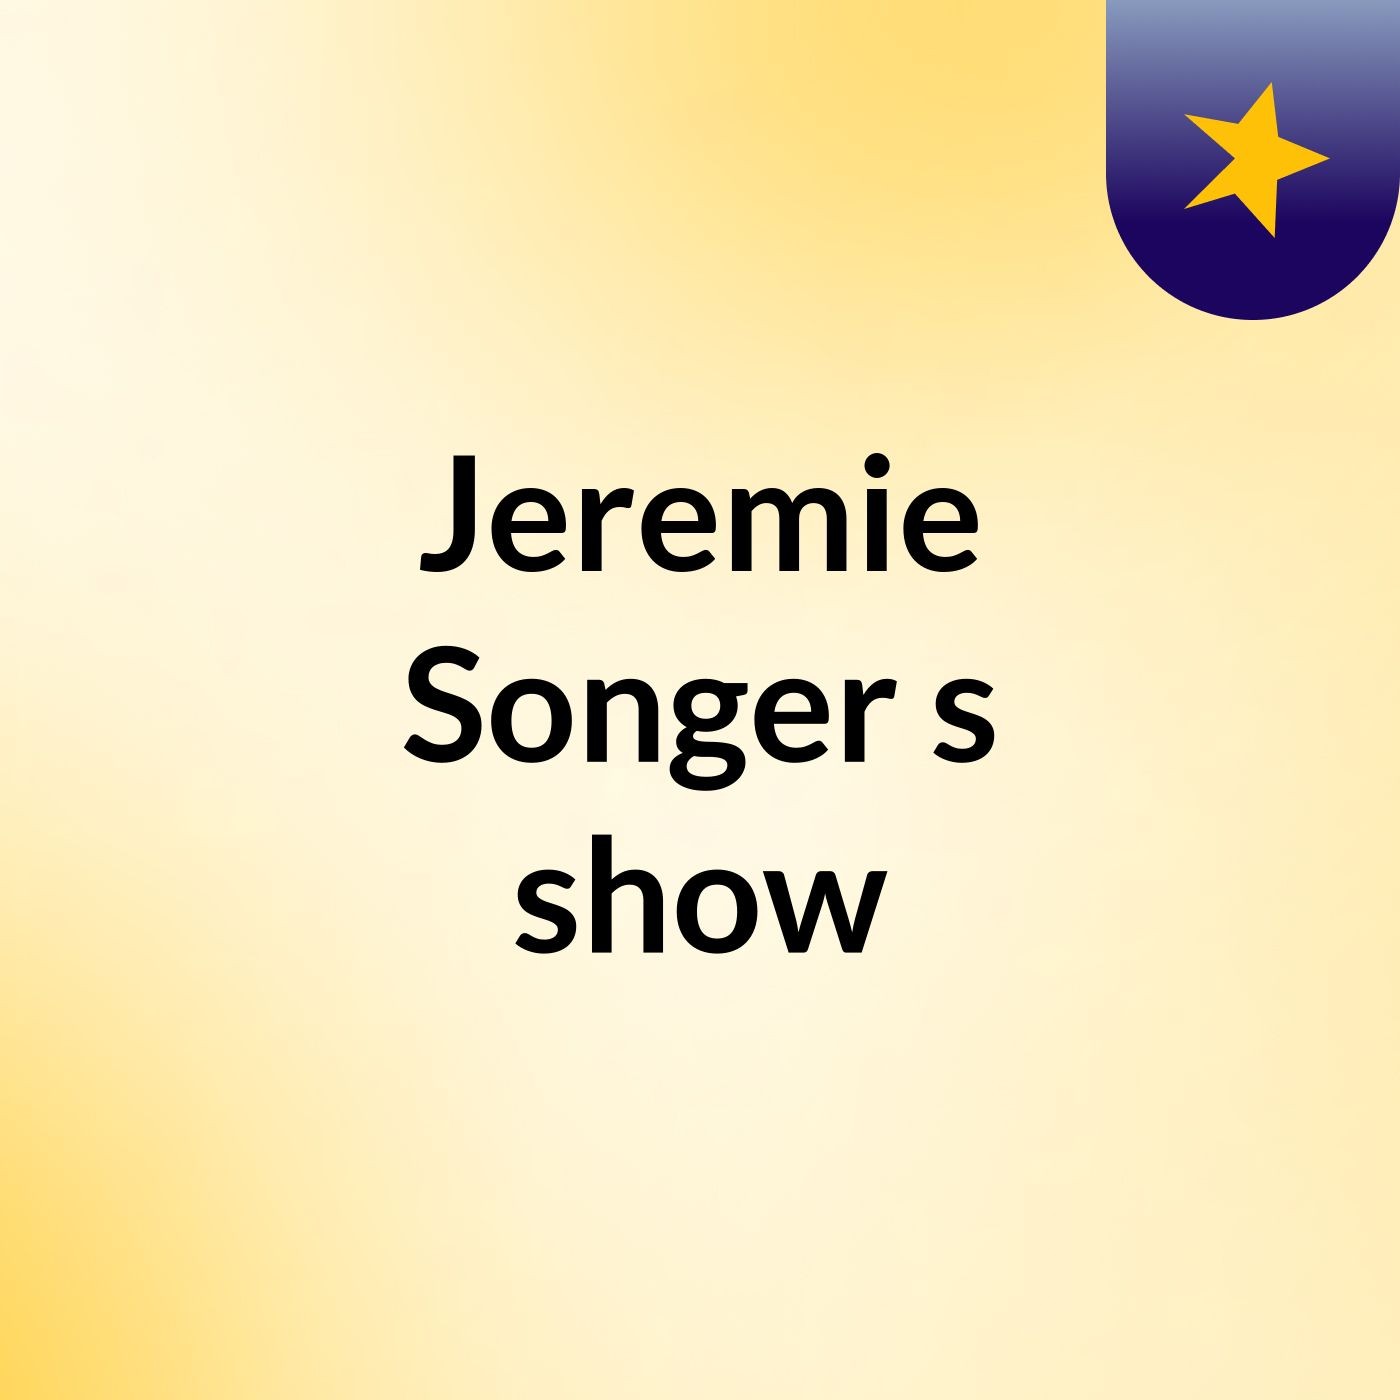 Jeremie Songer's show